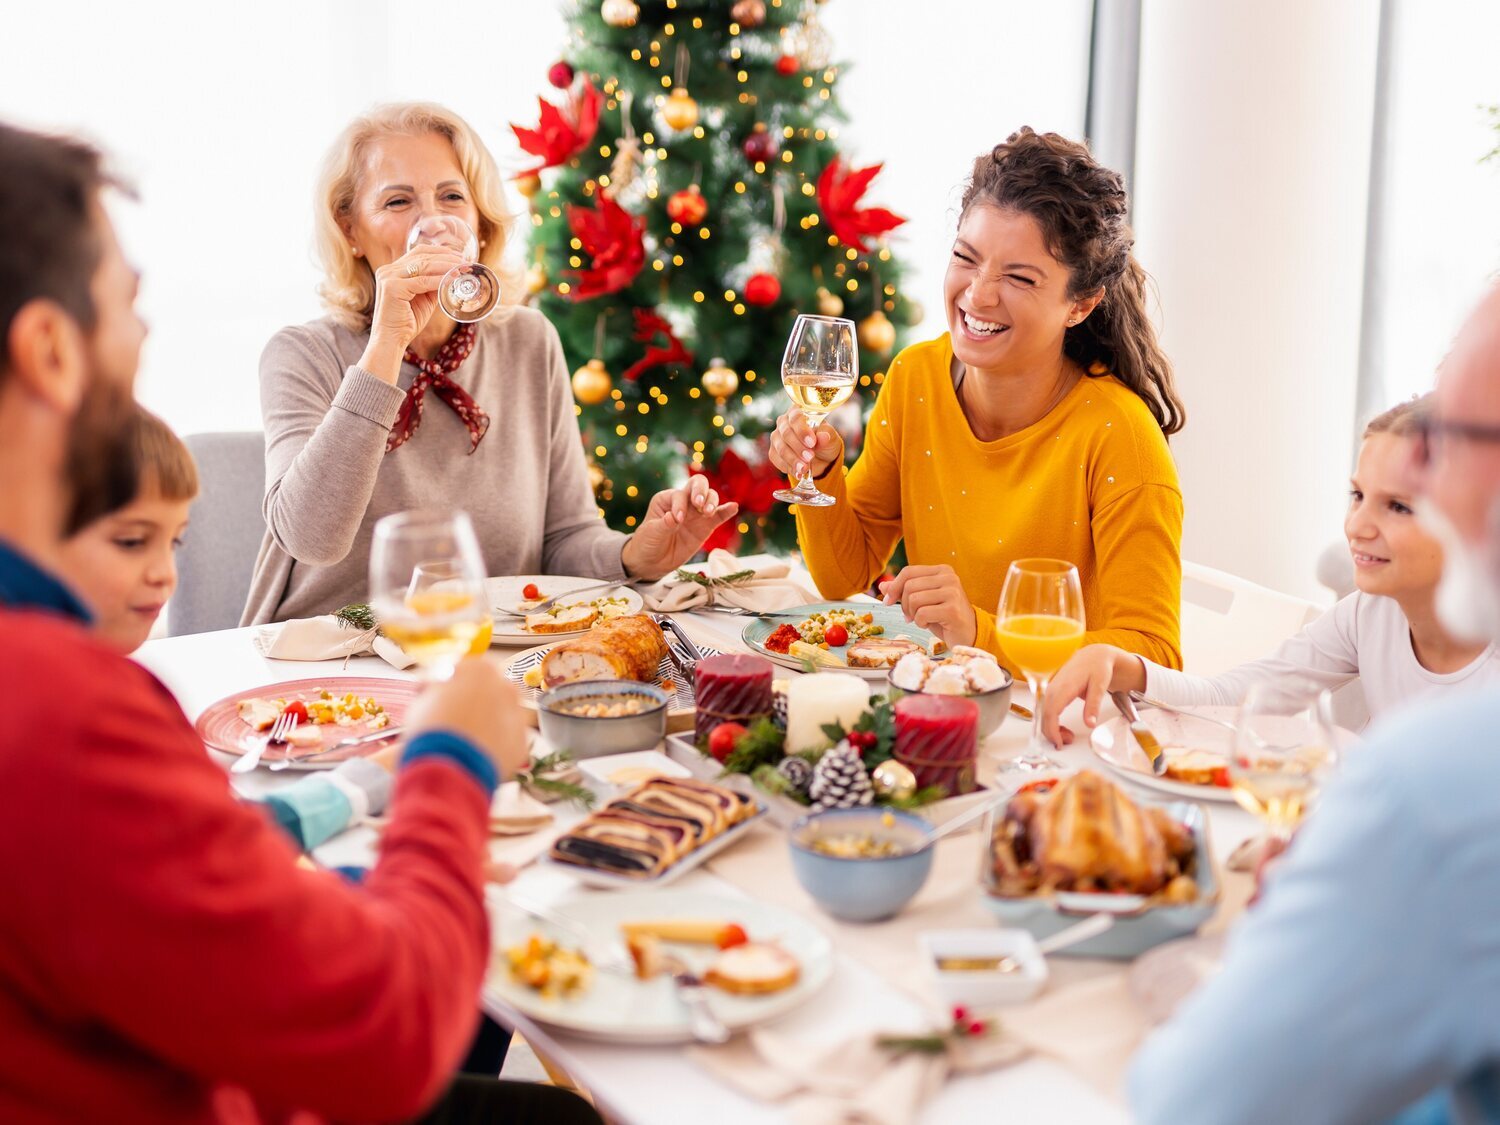 Consejos para evitar conflictos o momentos incómodos en las comidas o cenas navideñas